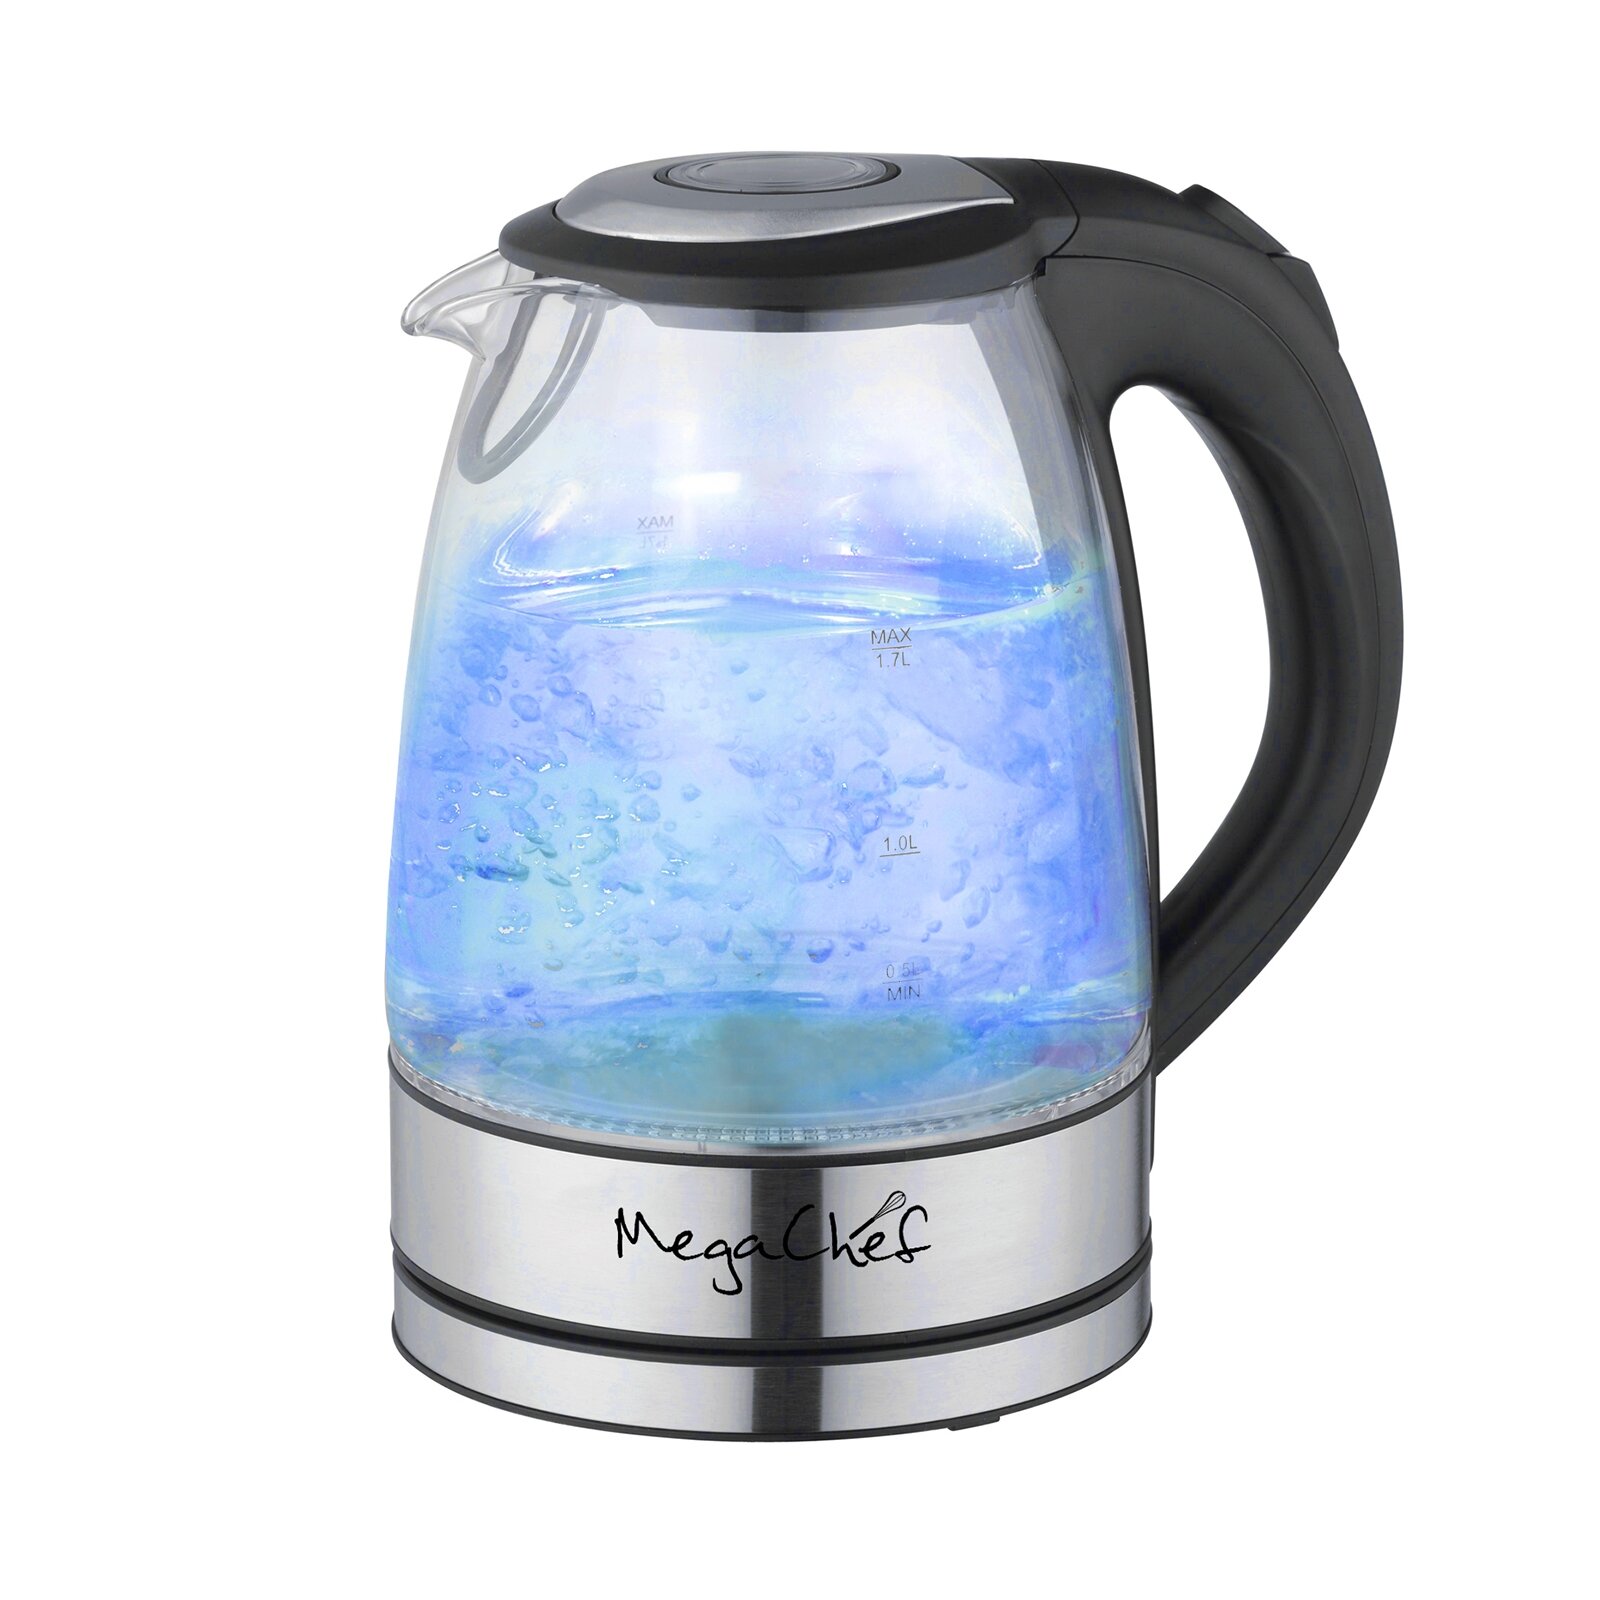 Chefman 1.7 Liter/1.8 Quart Precision Electric Glass Digital Tea